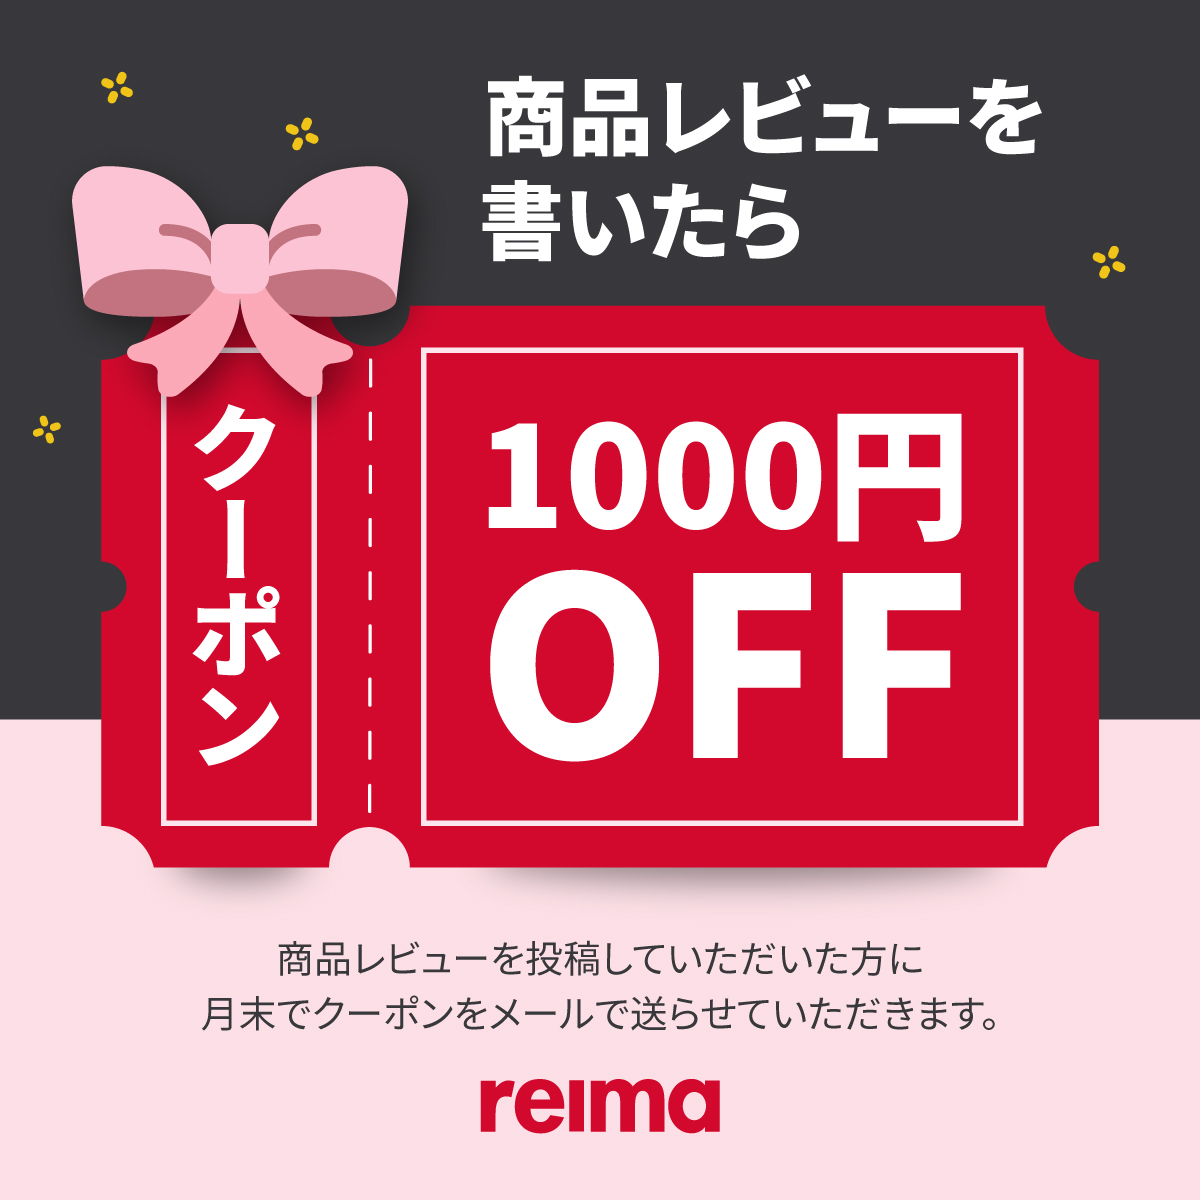 Humble Bunny case study for Reima Japan project Rakuten coupon